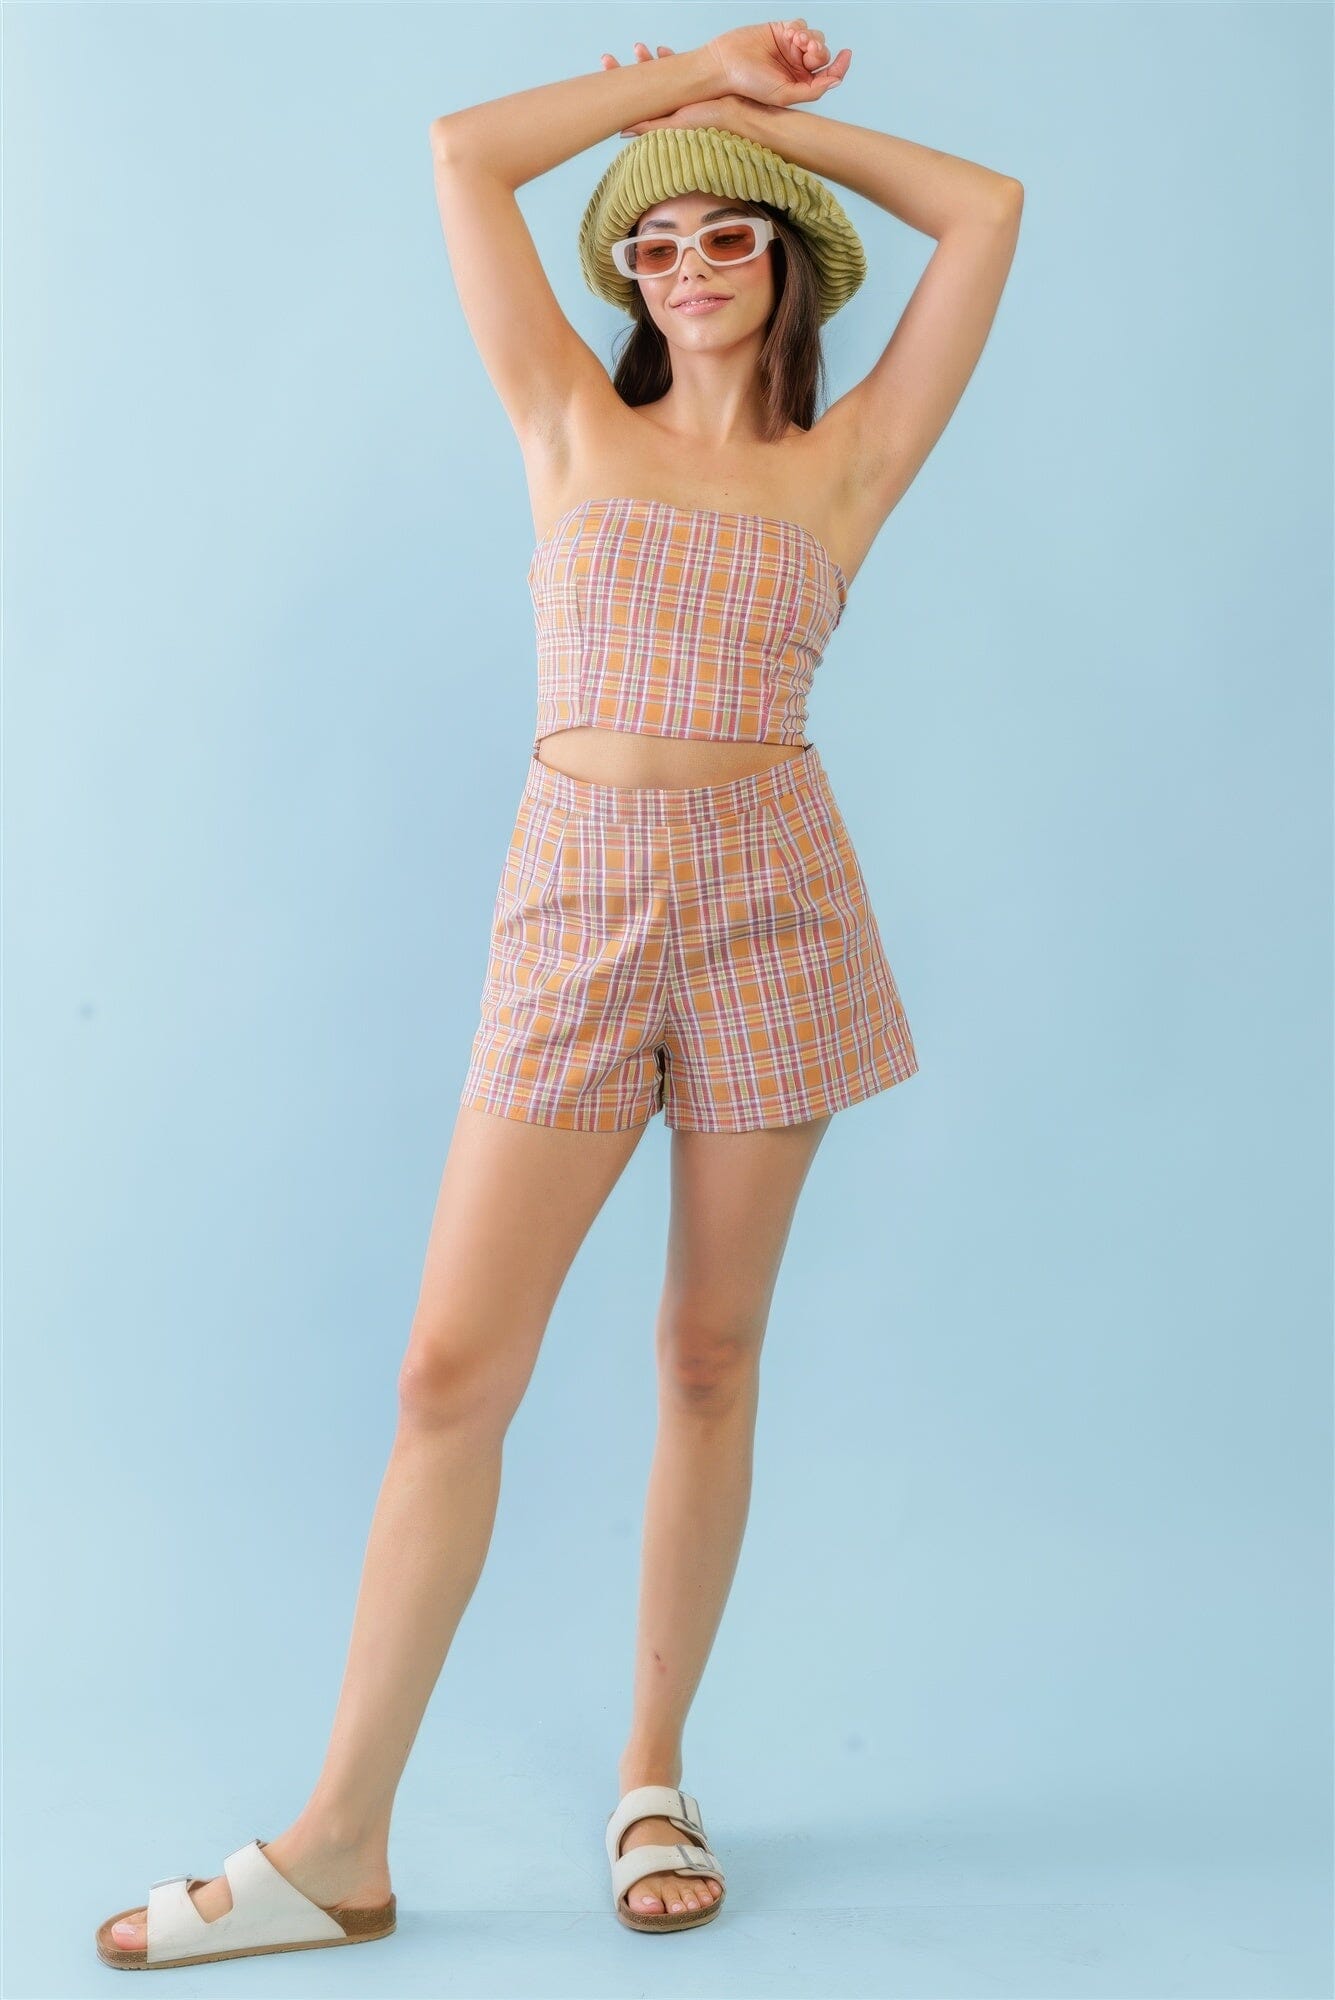 Orange & Aqua Plaid Print Cotton Strapless Crop Top & High Waist Two Pocket Shorts Outfit Set Outfit Sets jehouze 